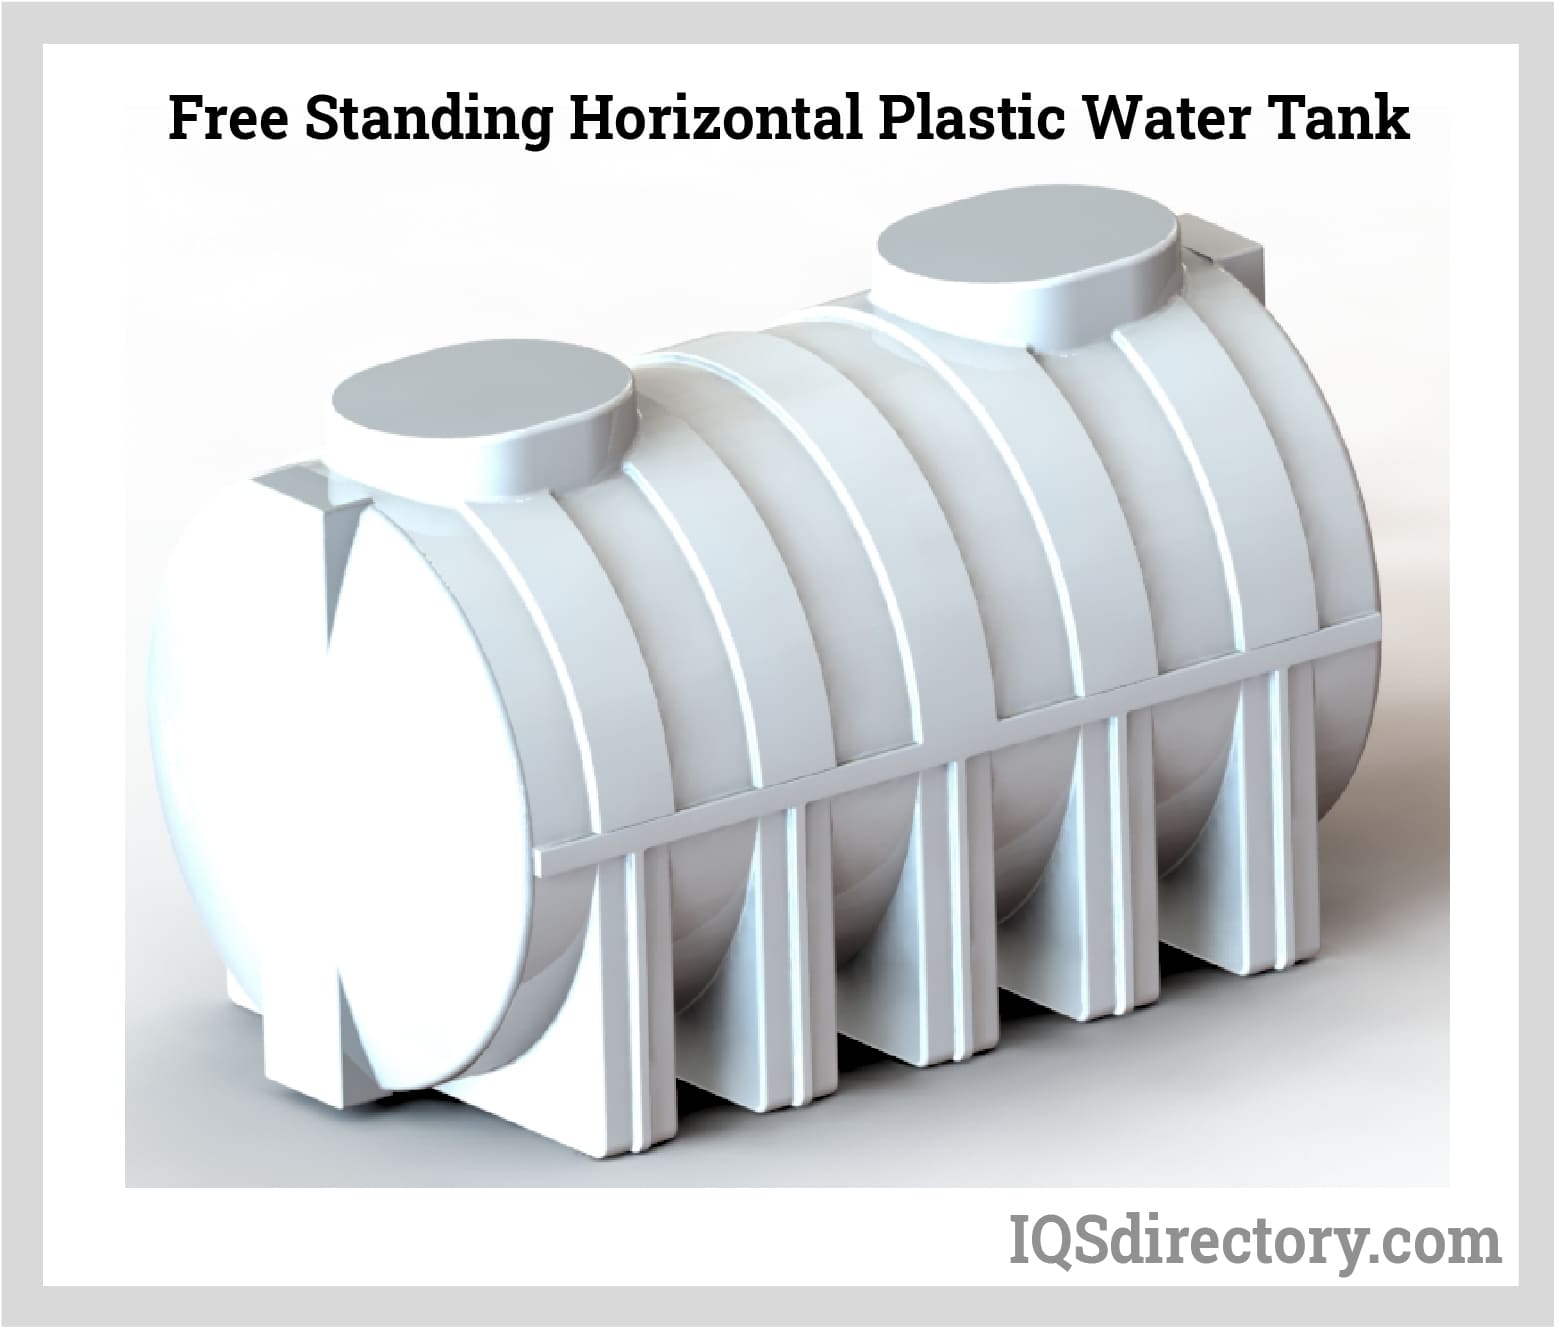 Free Standing Horizontal Plastic Water Tank